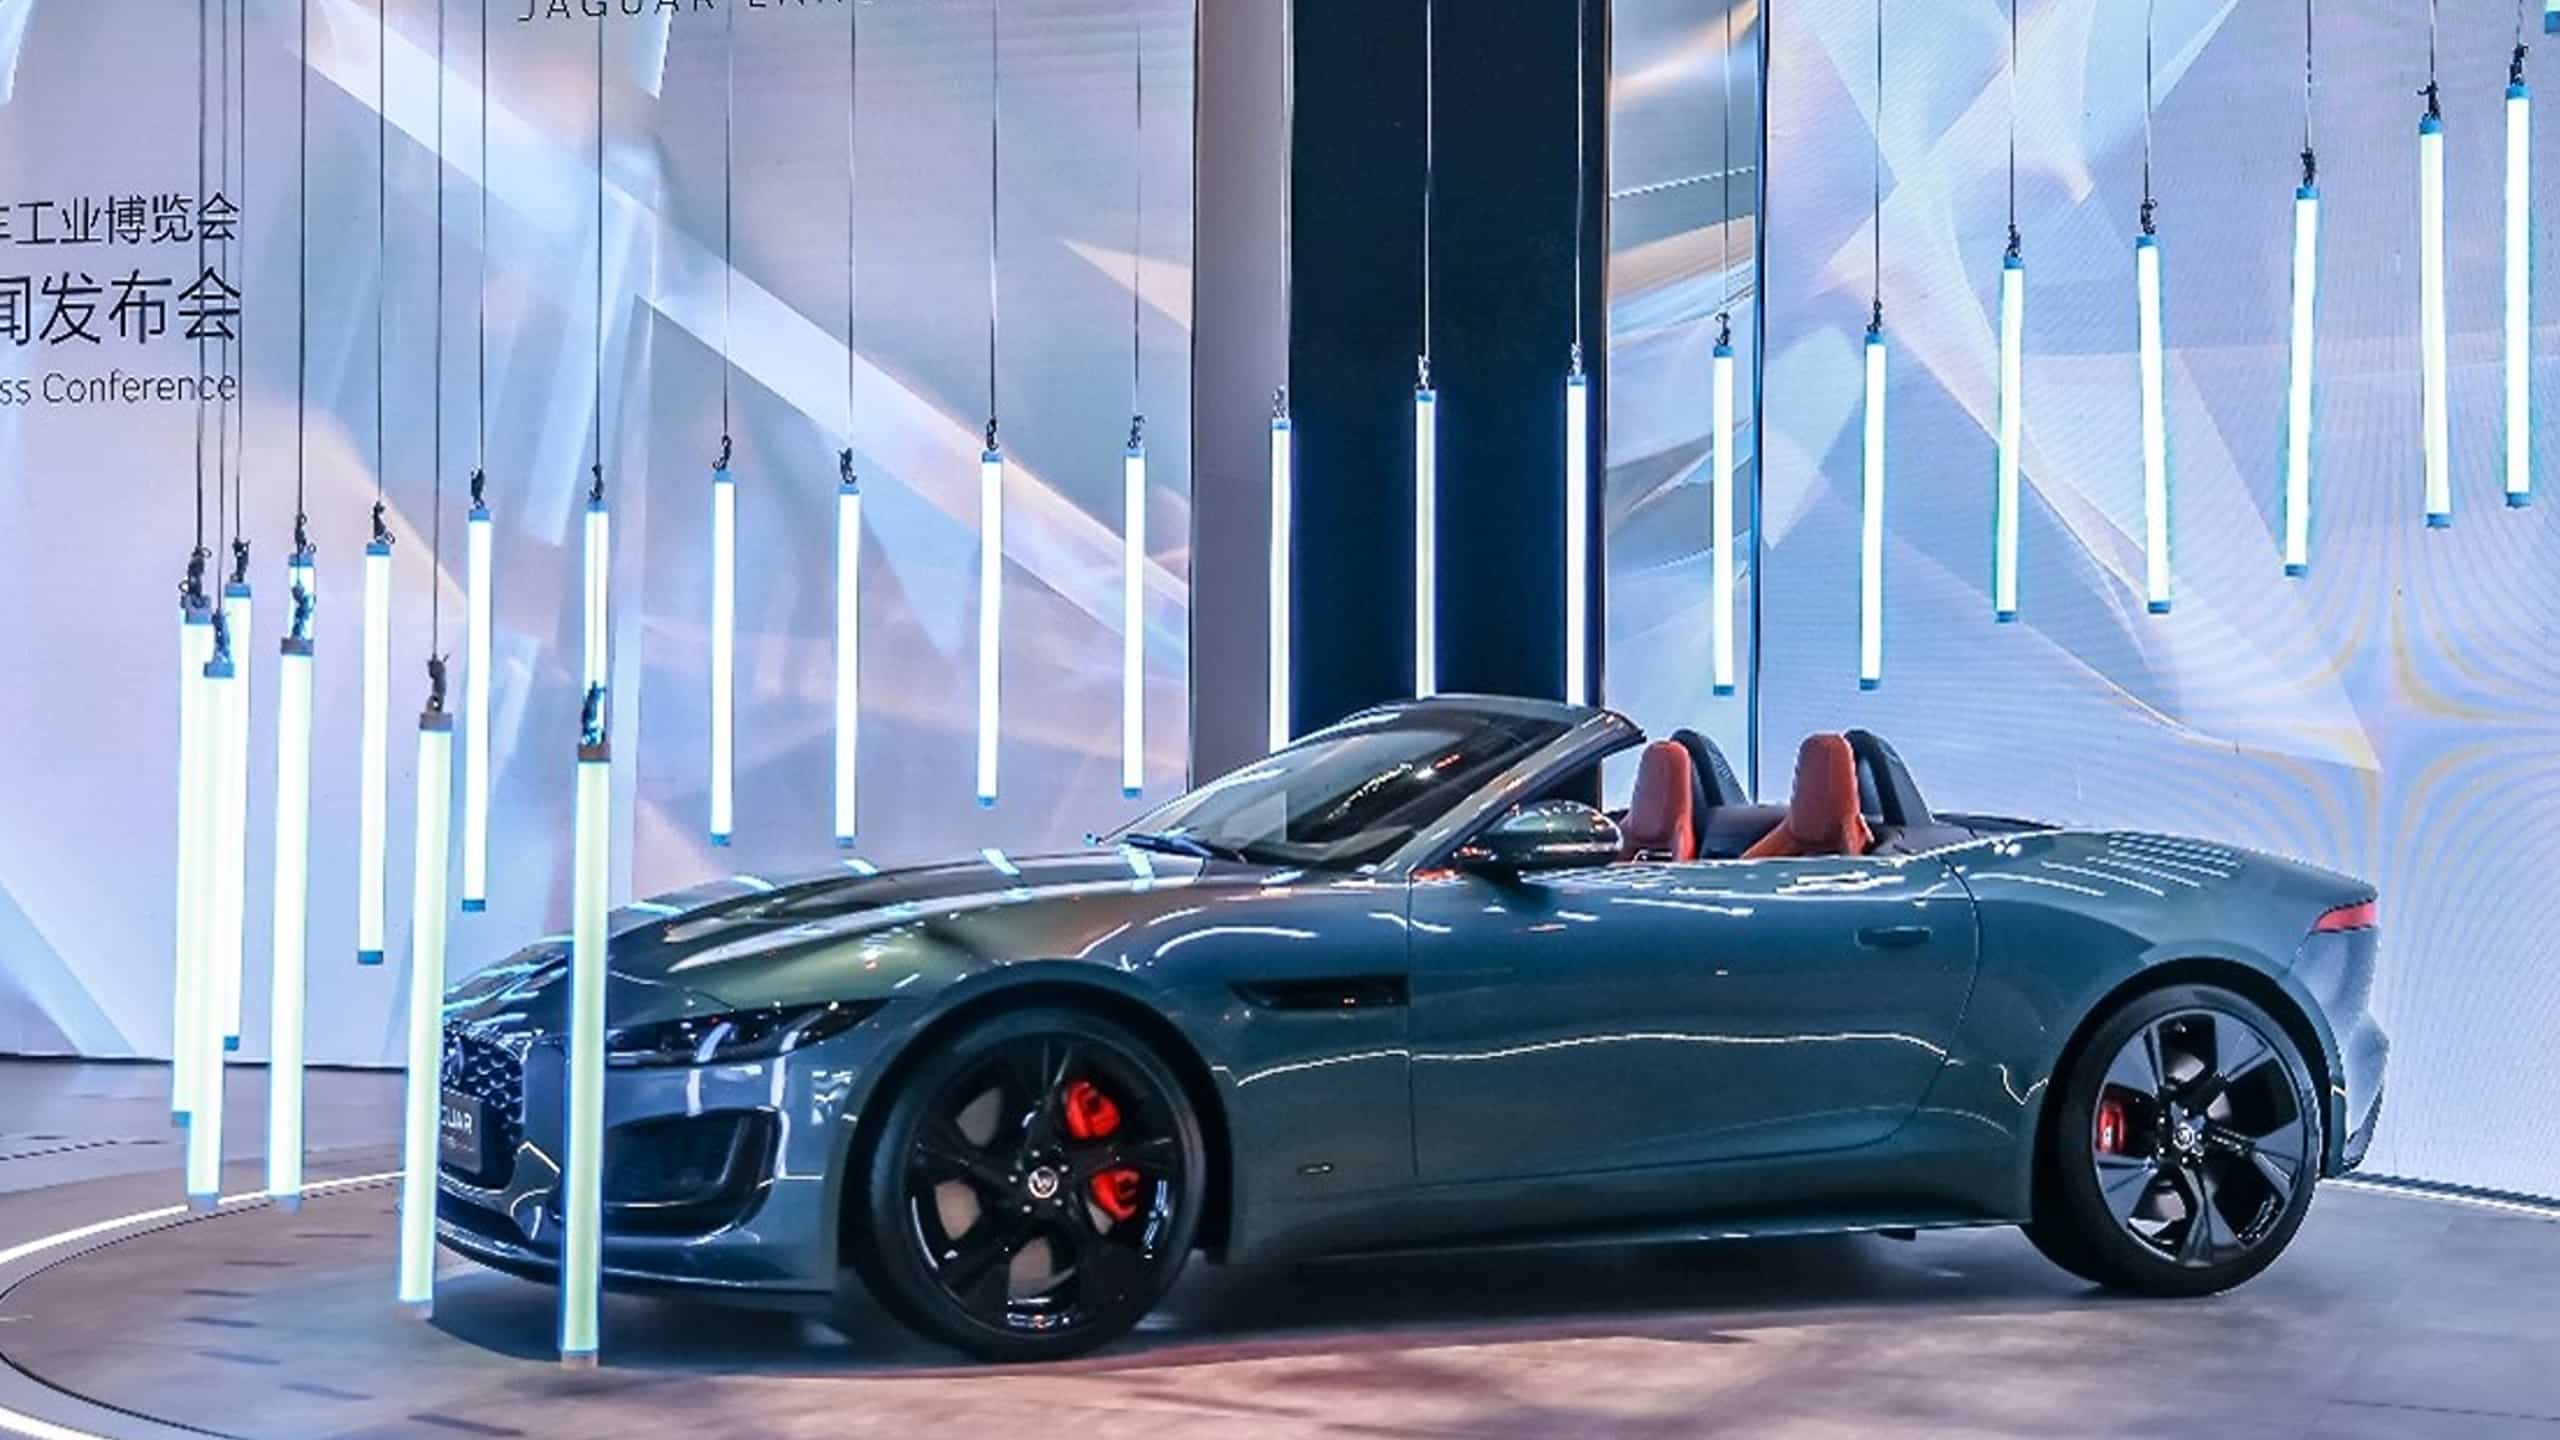 Jaguar F-TYPE 75th Anniversary Collection adopts Jaguar's proud aluminum alloy body structure